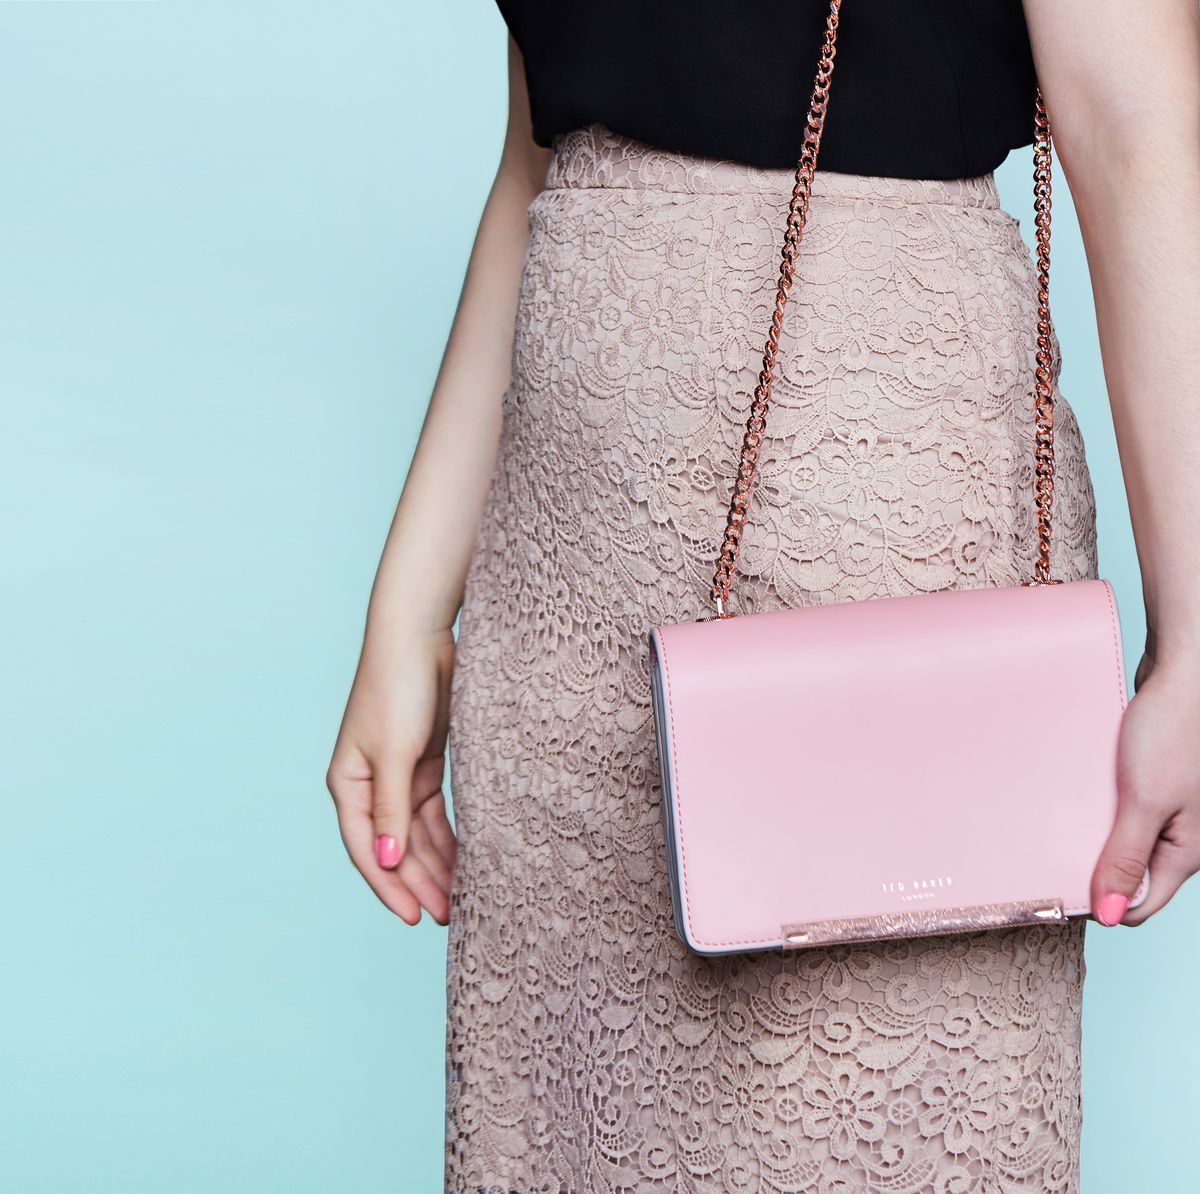 Ted Baker pale pink handbag, excellent condition